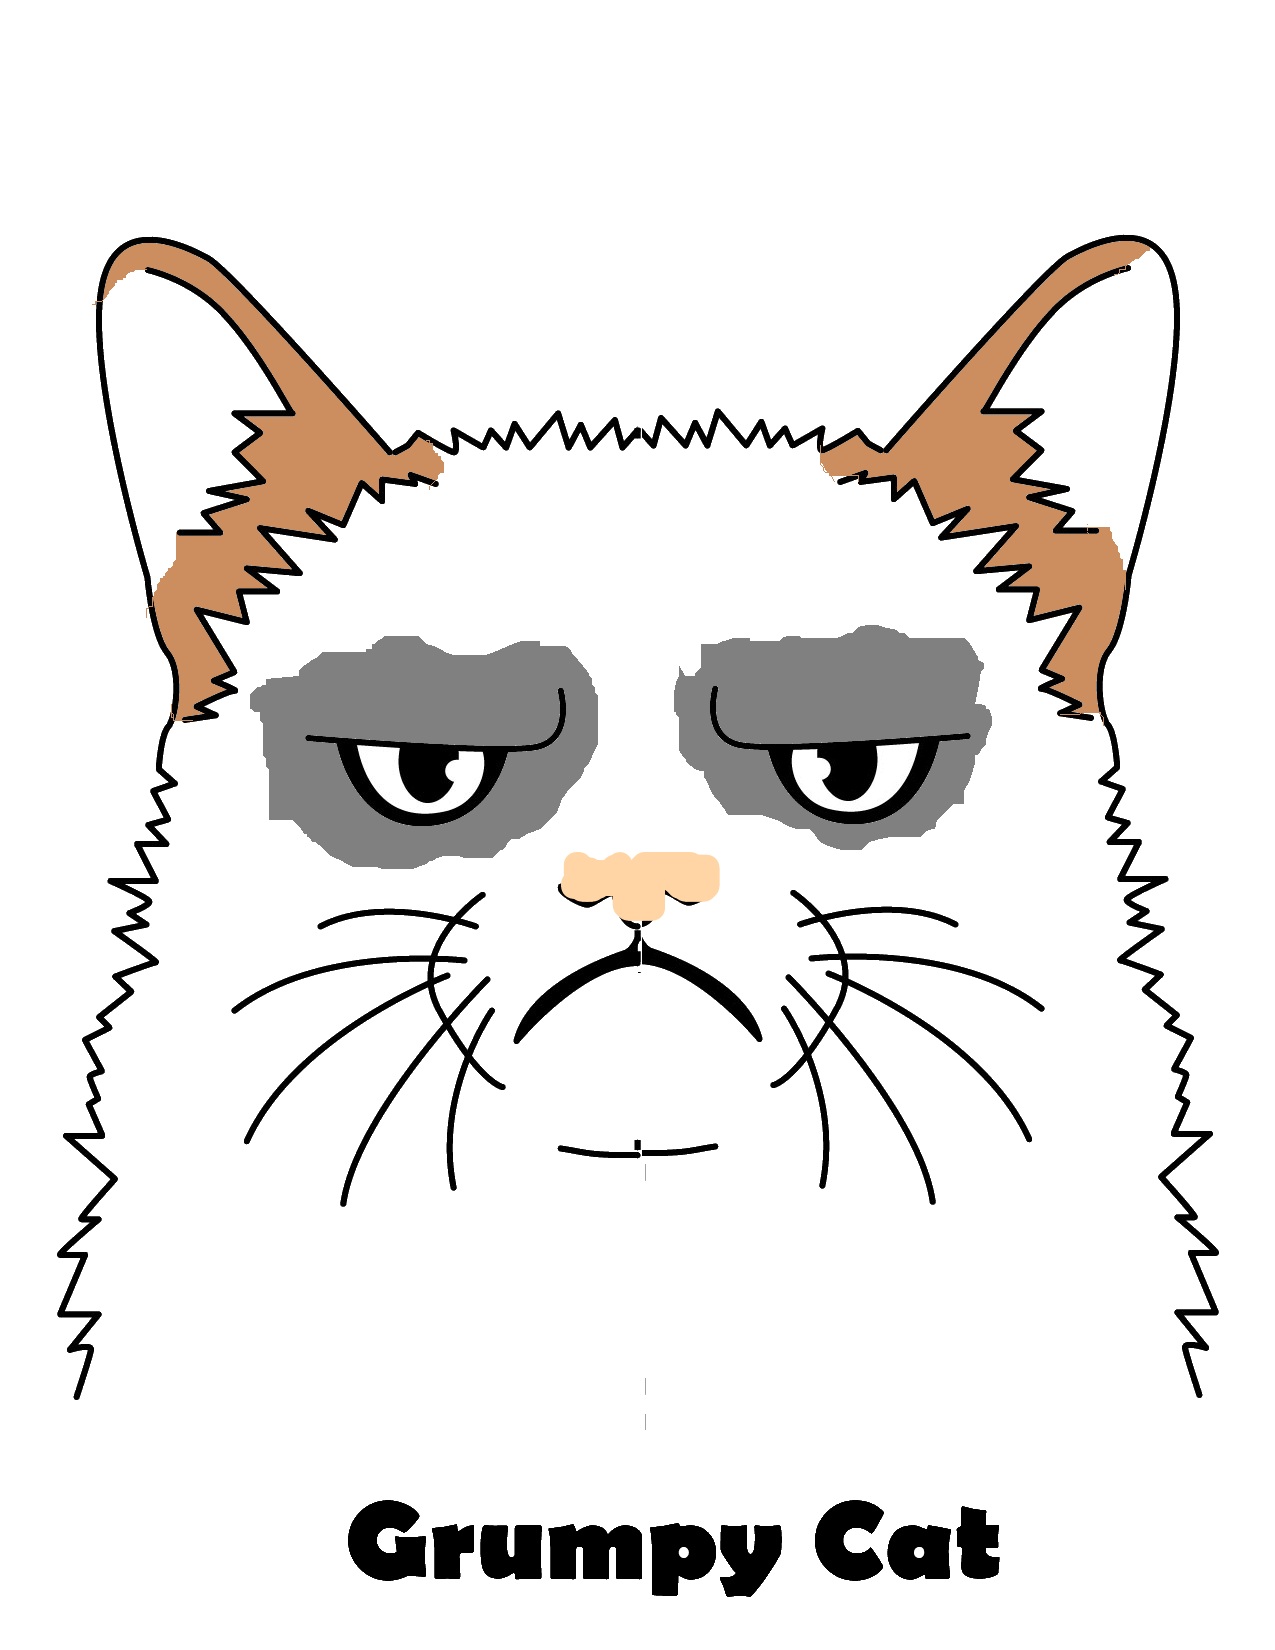 Grumpy cat clipart - Jooinn.